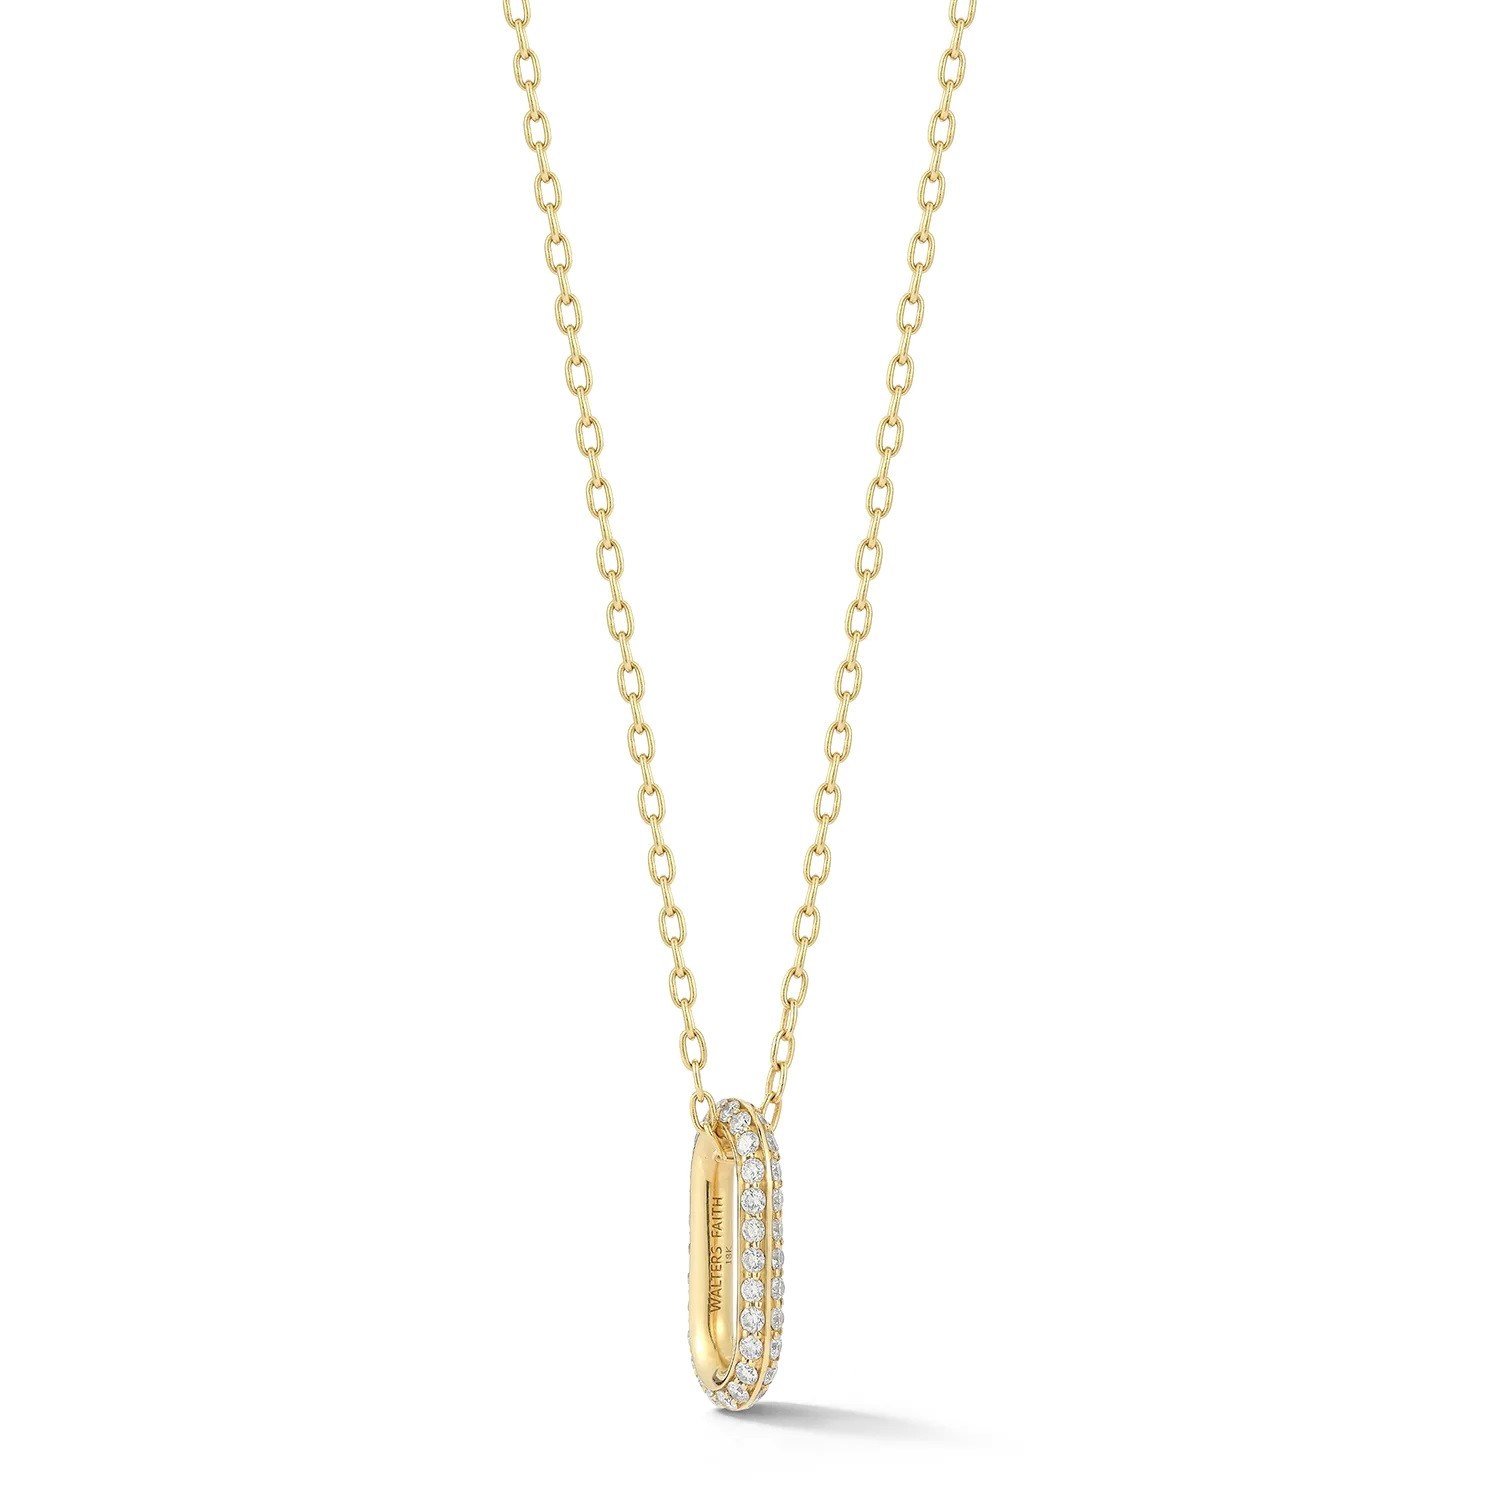 Walters Faith Saxon 18k Yellow Gold  Diamond Pave Link Necklace 24"